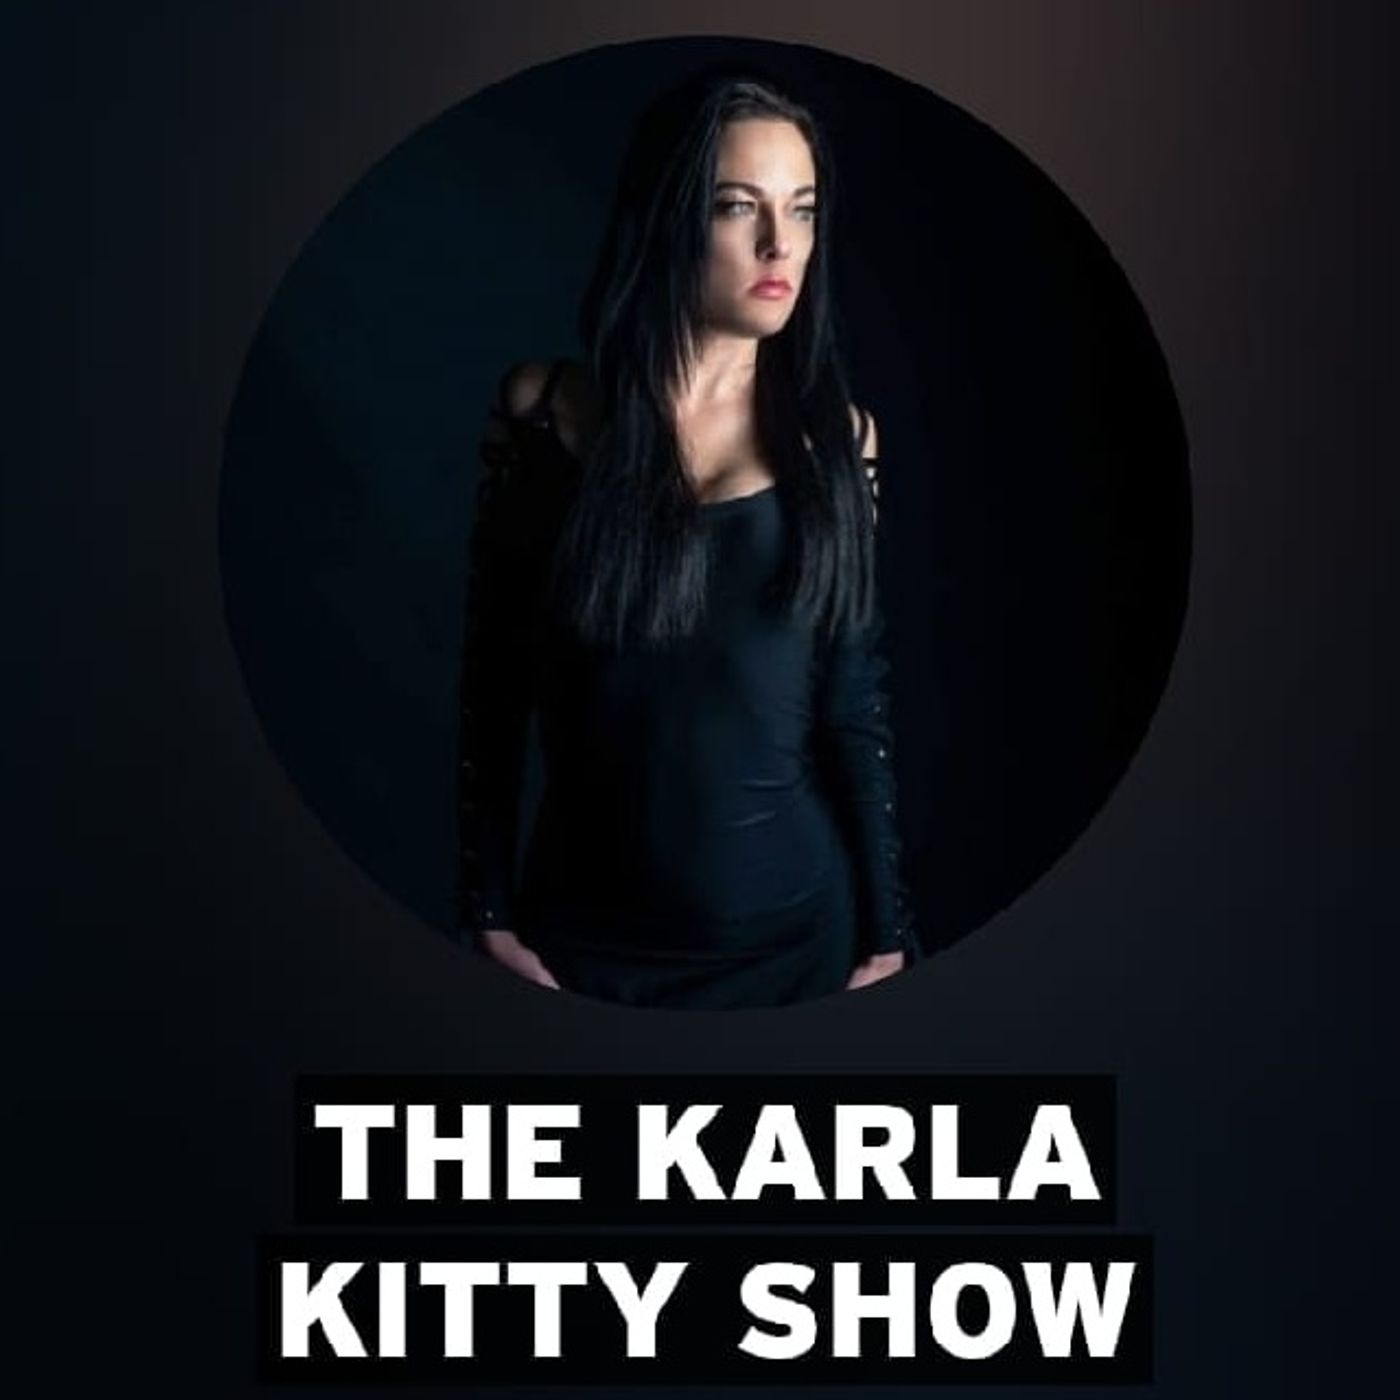 The Karla Kitty Show